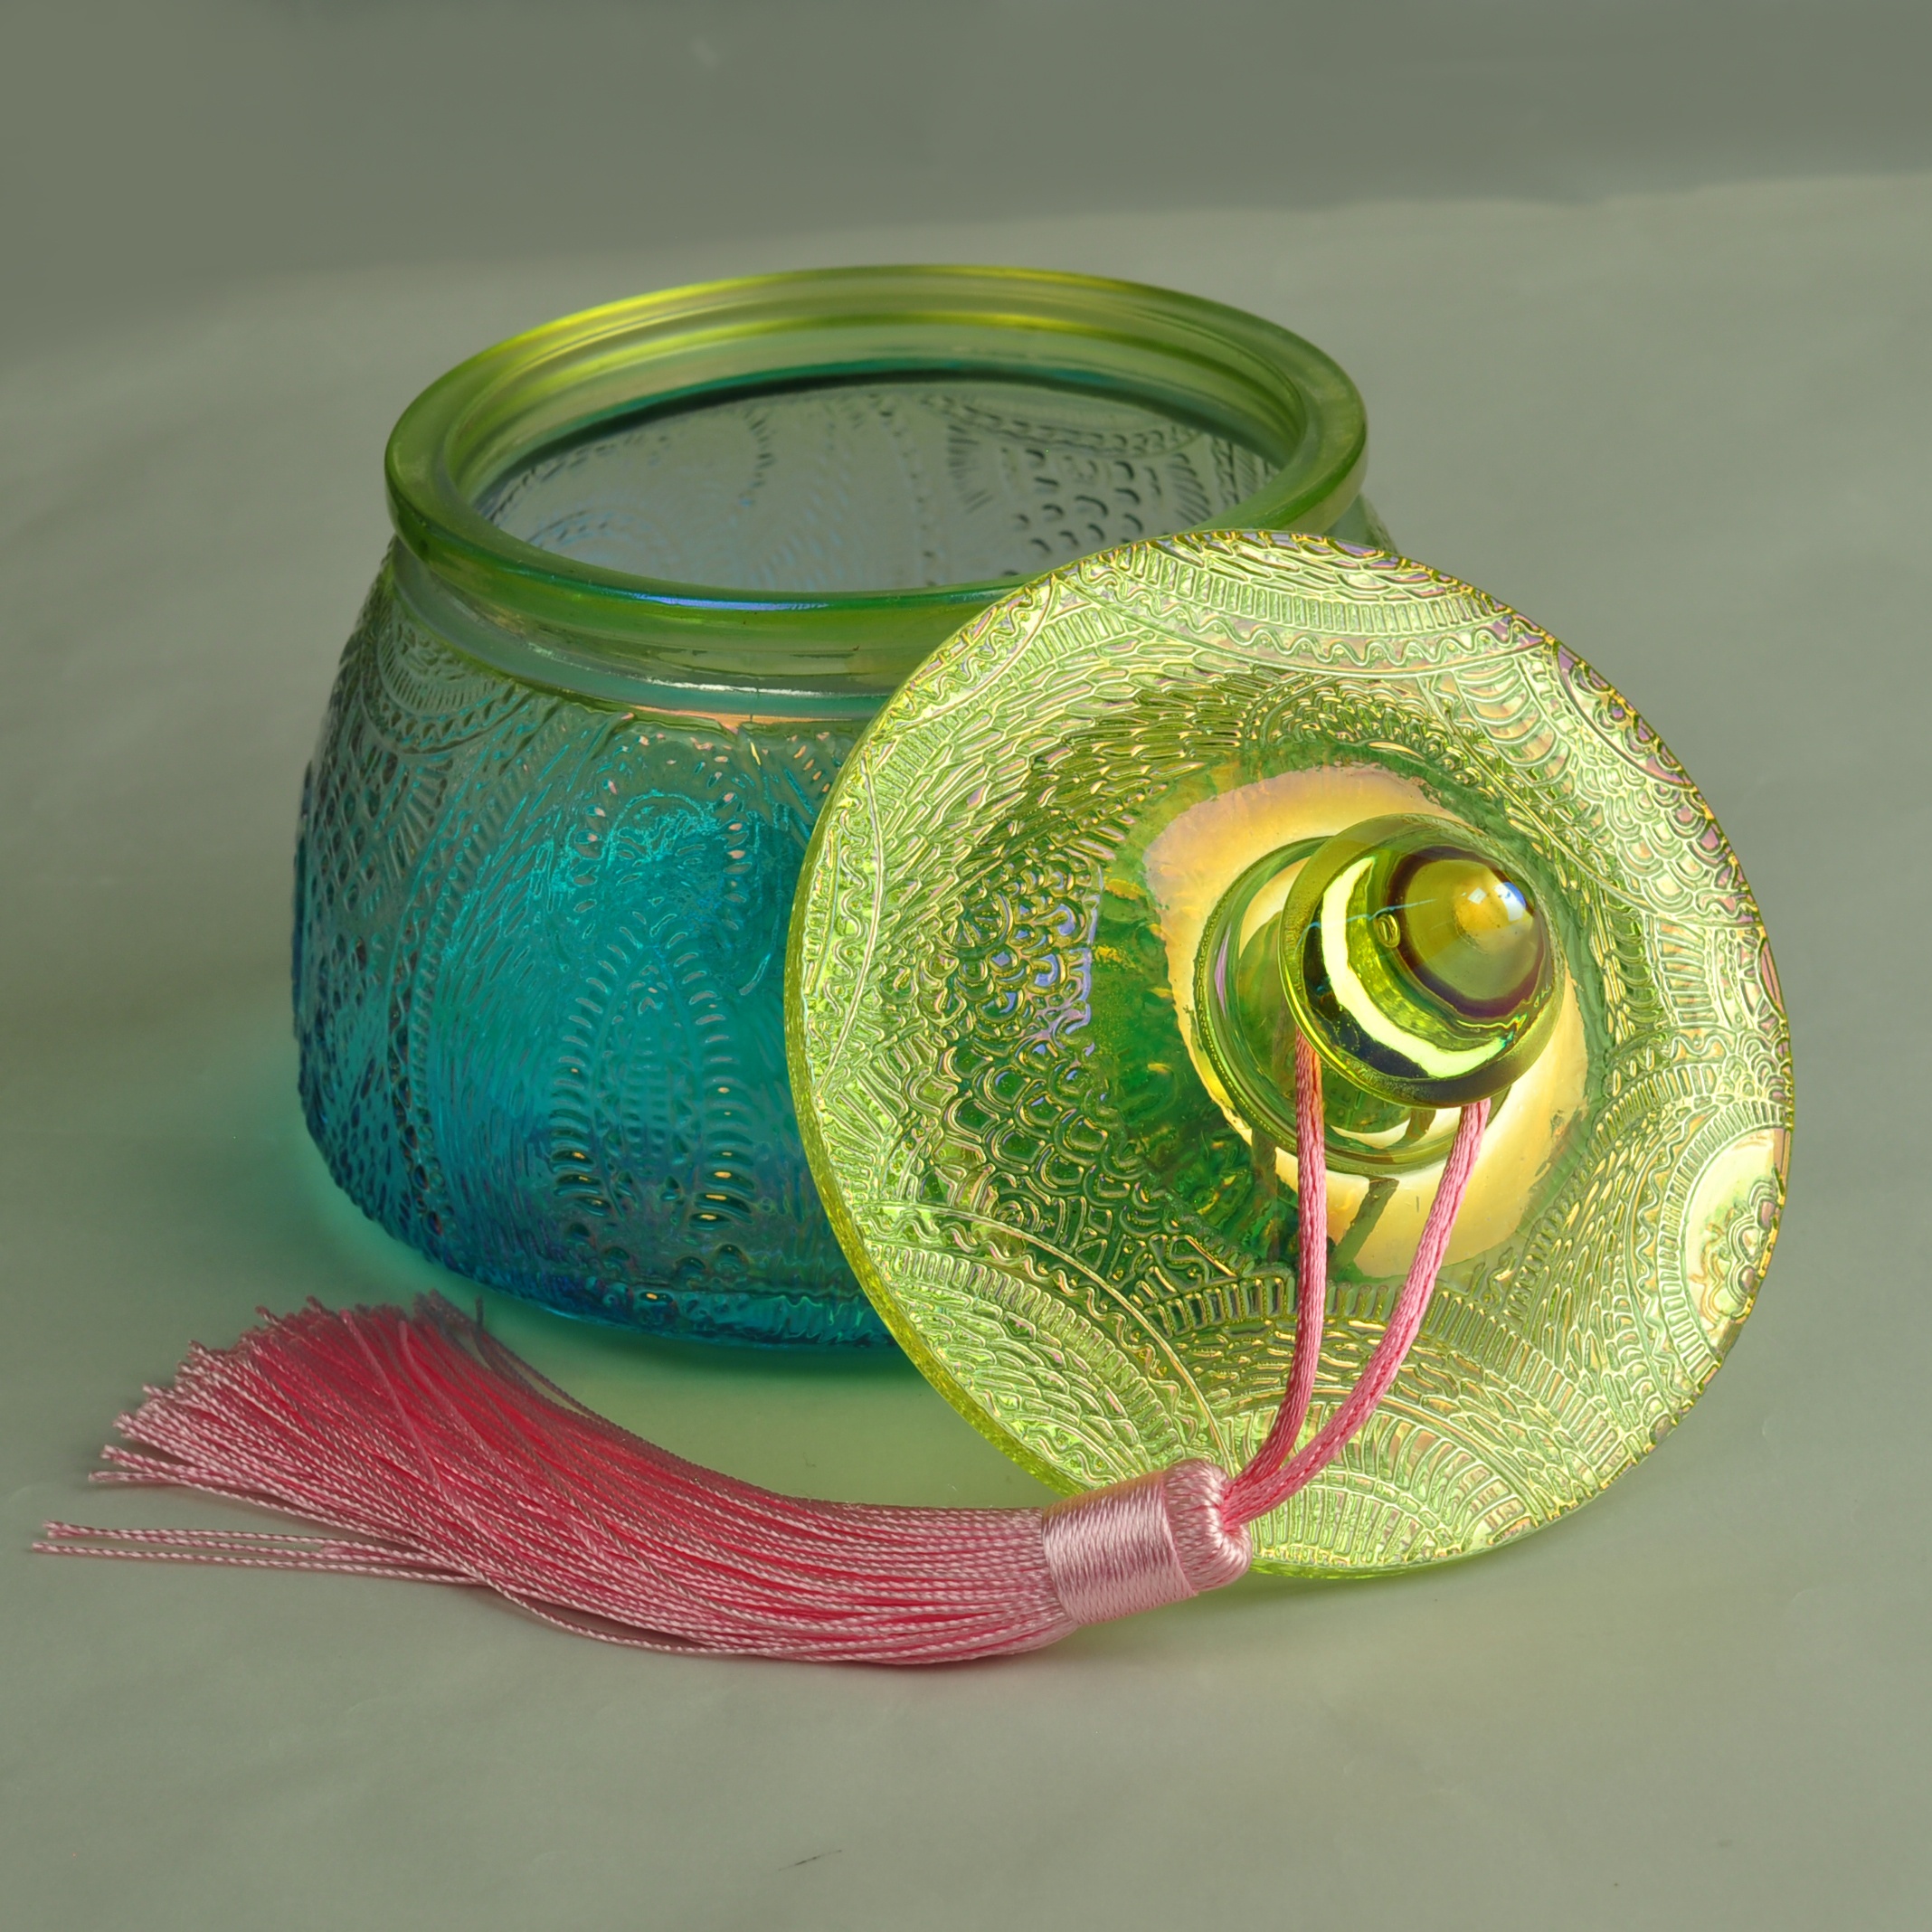 14oz OEM Custom empty decorative glass candle jars with lid in bulk